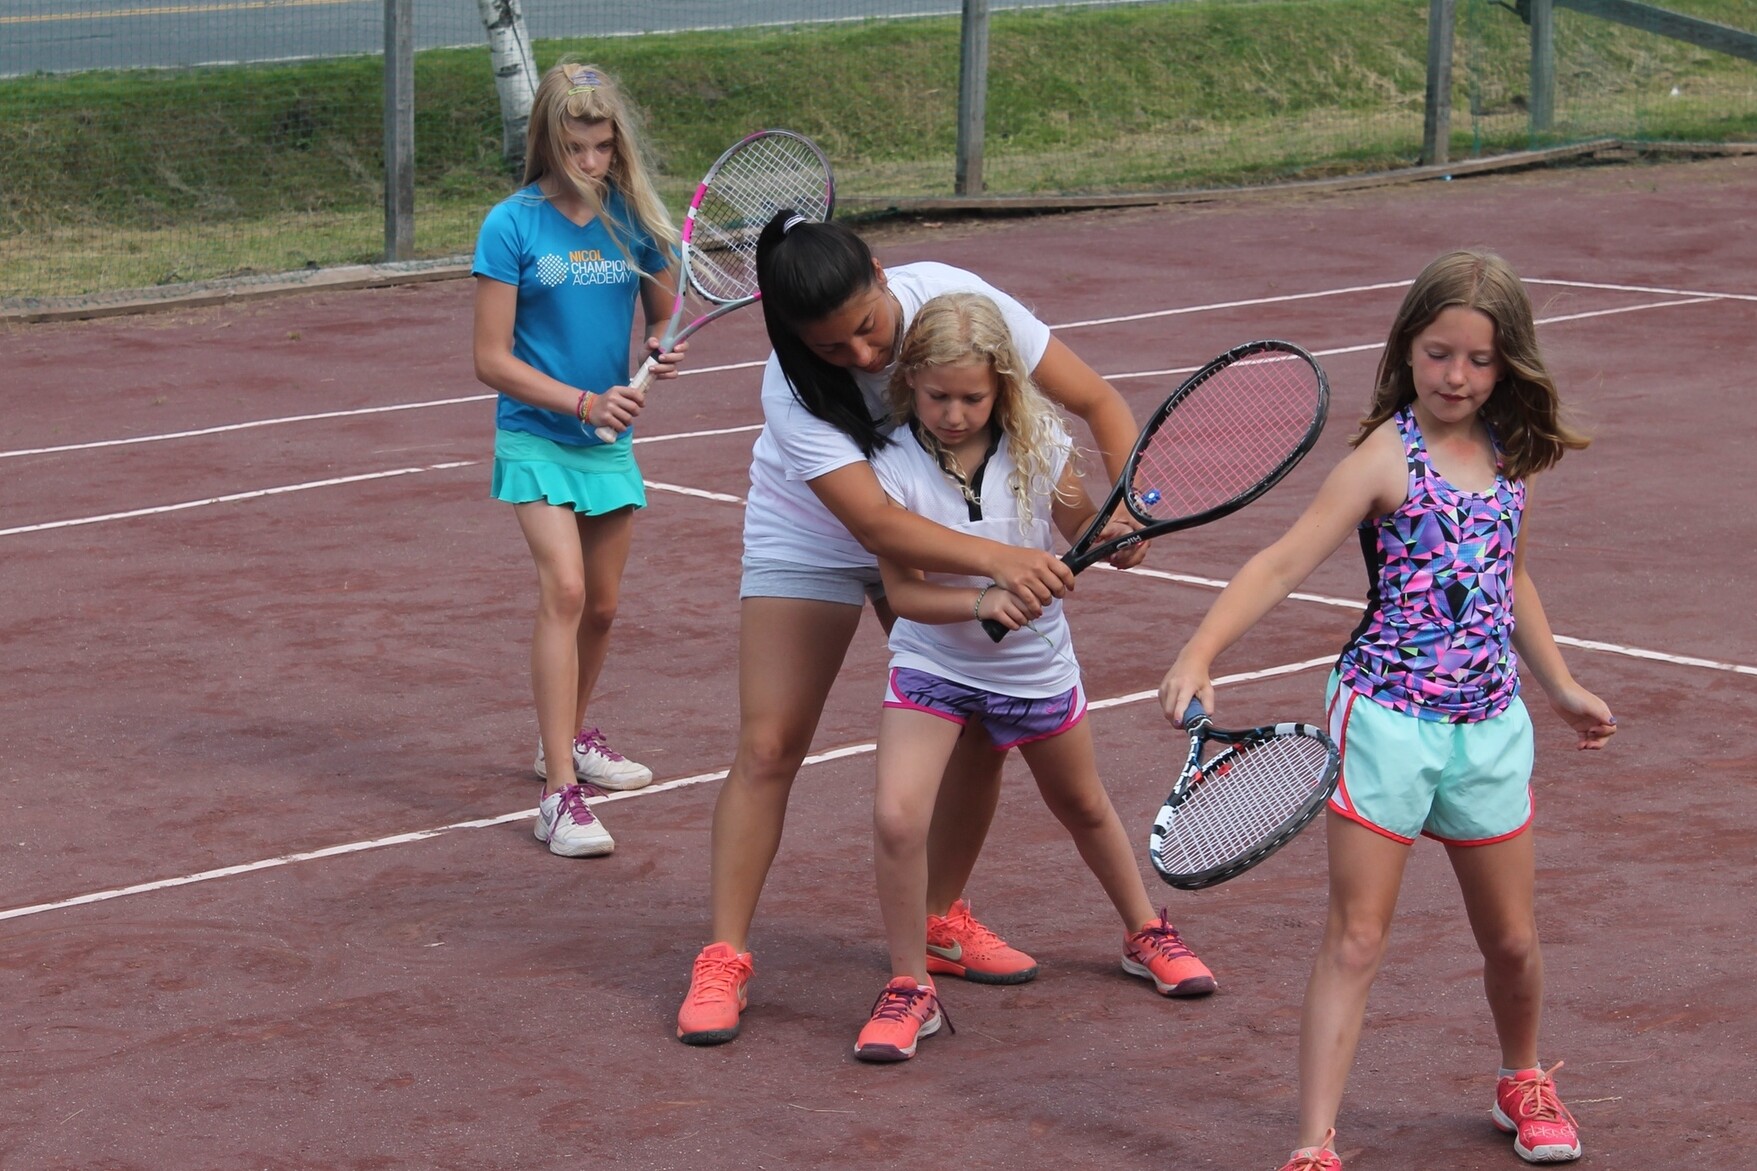 windridge tennis campers playing tennis